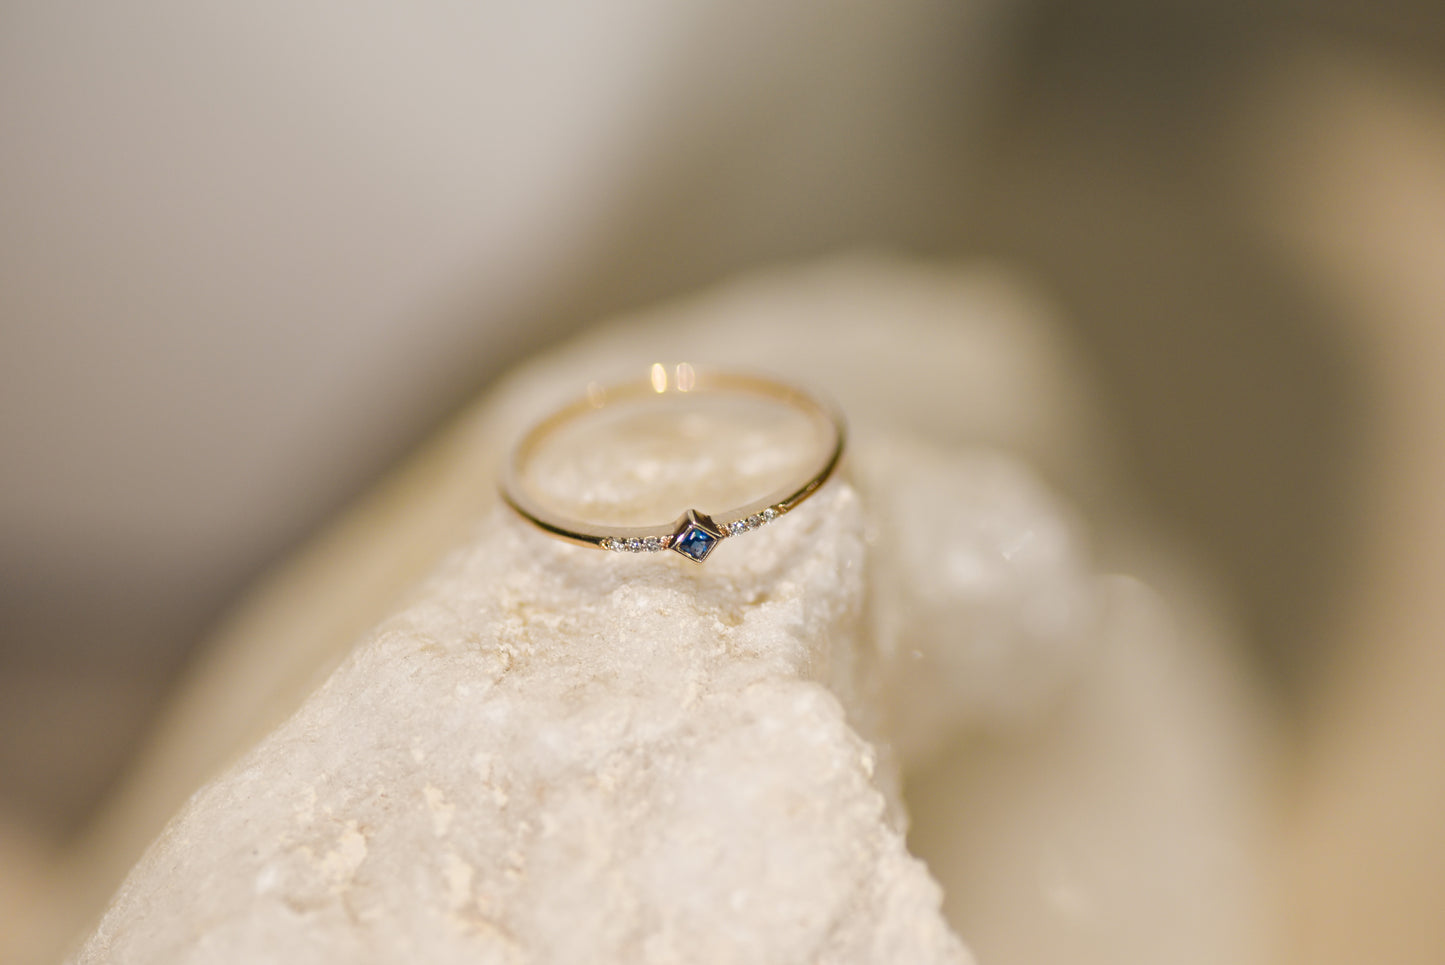 Dainty Sapphire and Diamond Ring